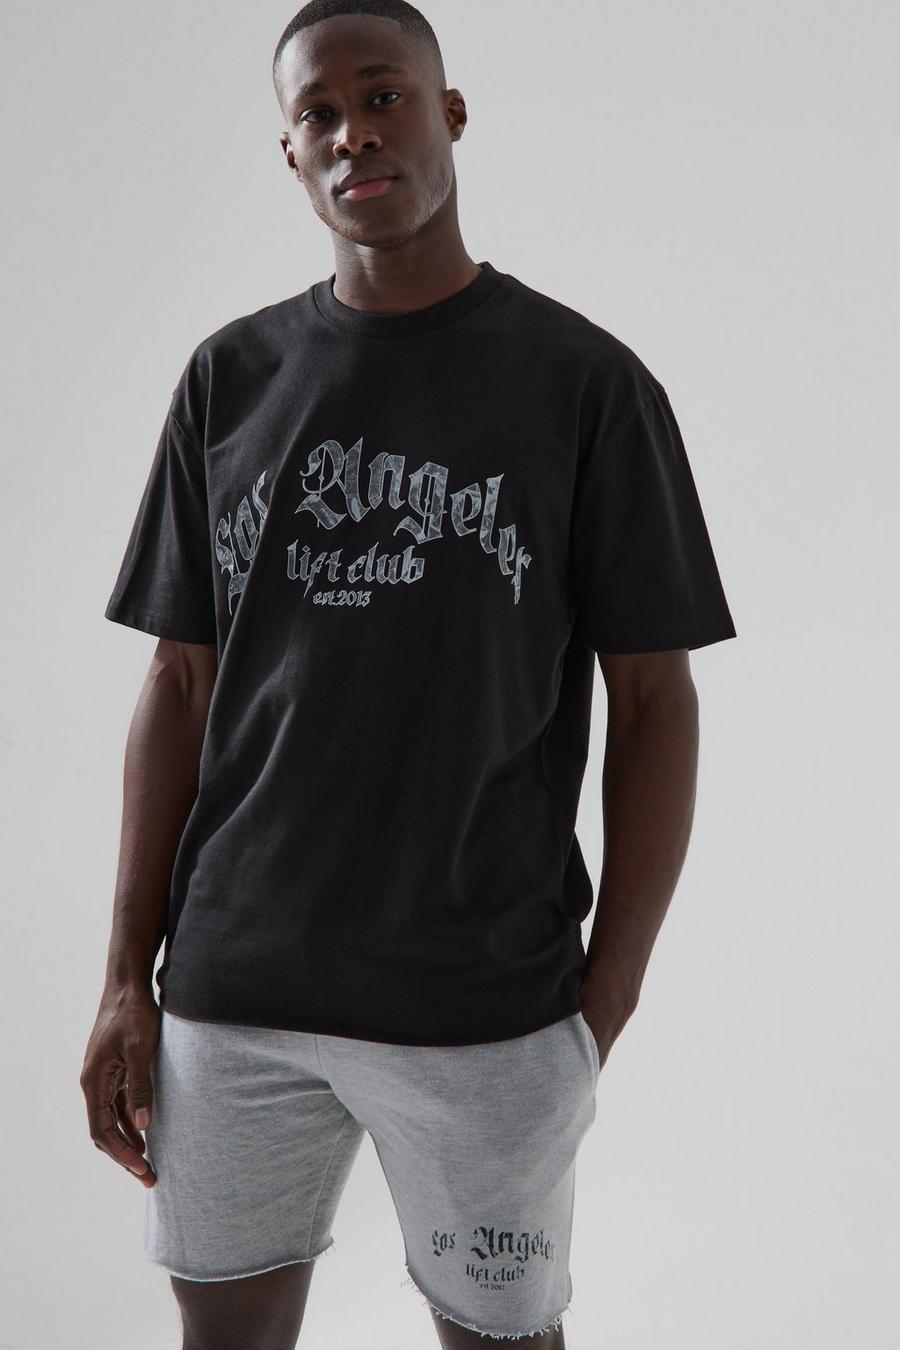 Ensemble avec t-shirt à slogan Los Angeles Lift Club - MAN Active, Black